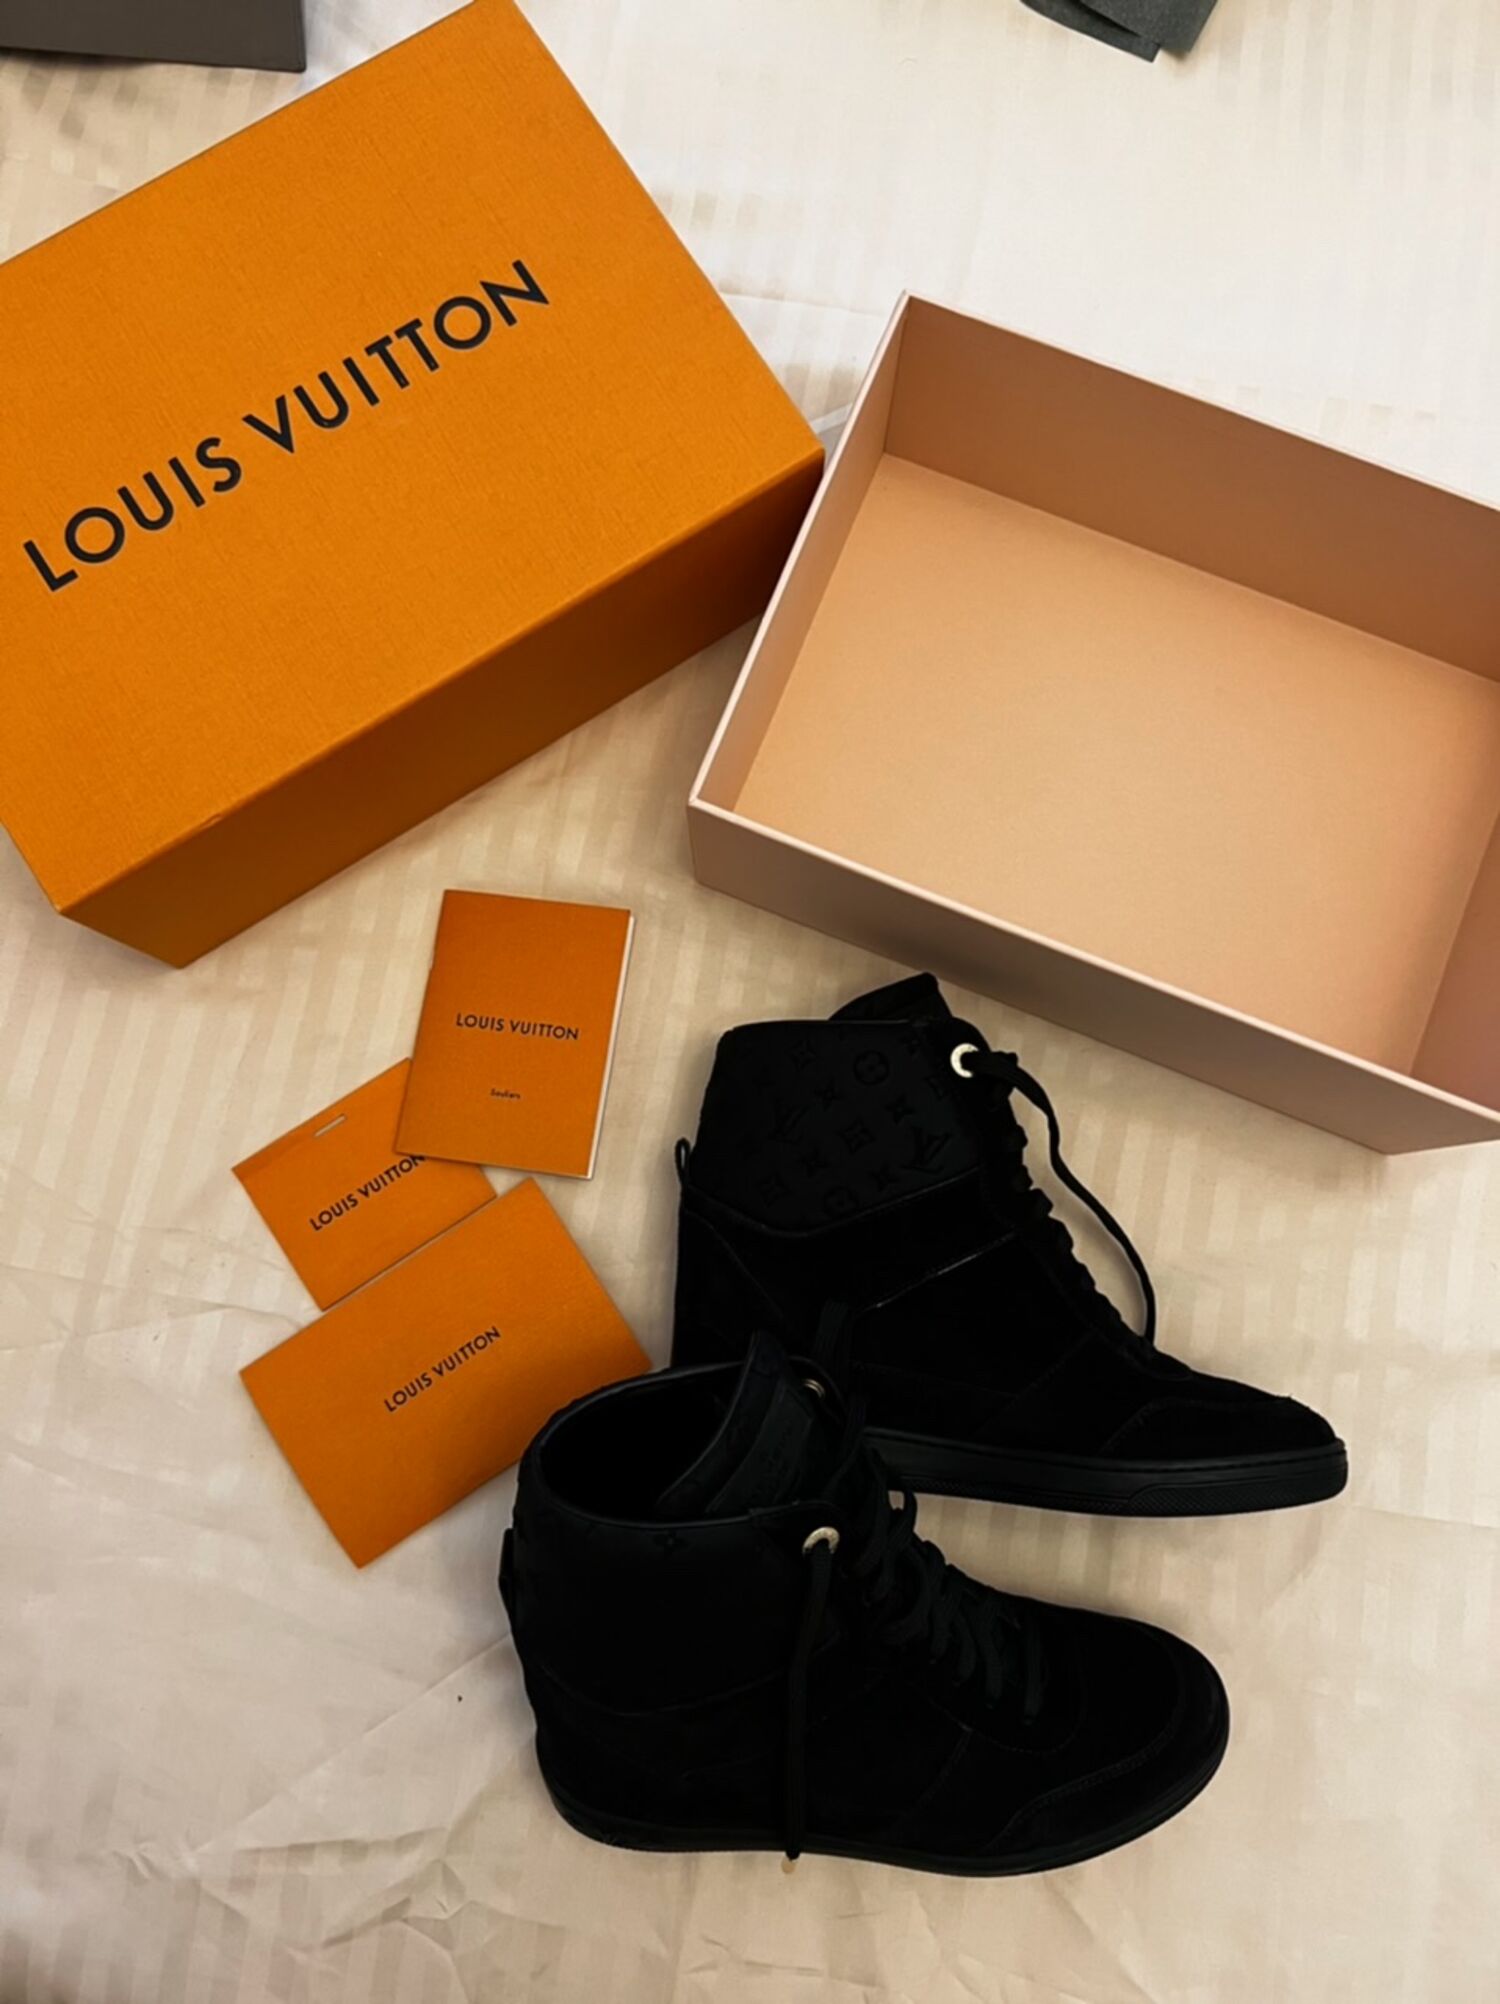 Louis Vuitton Embossed Monogram Suede Cliff Top Wedge Sneakers Size 7